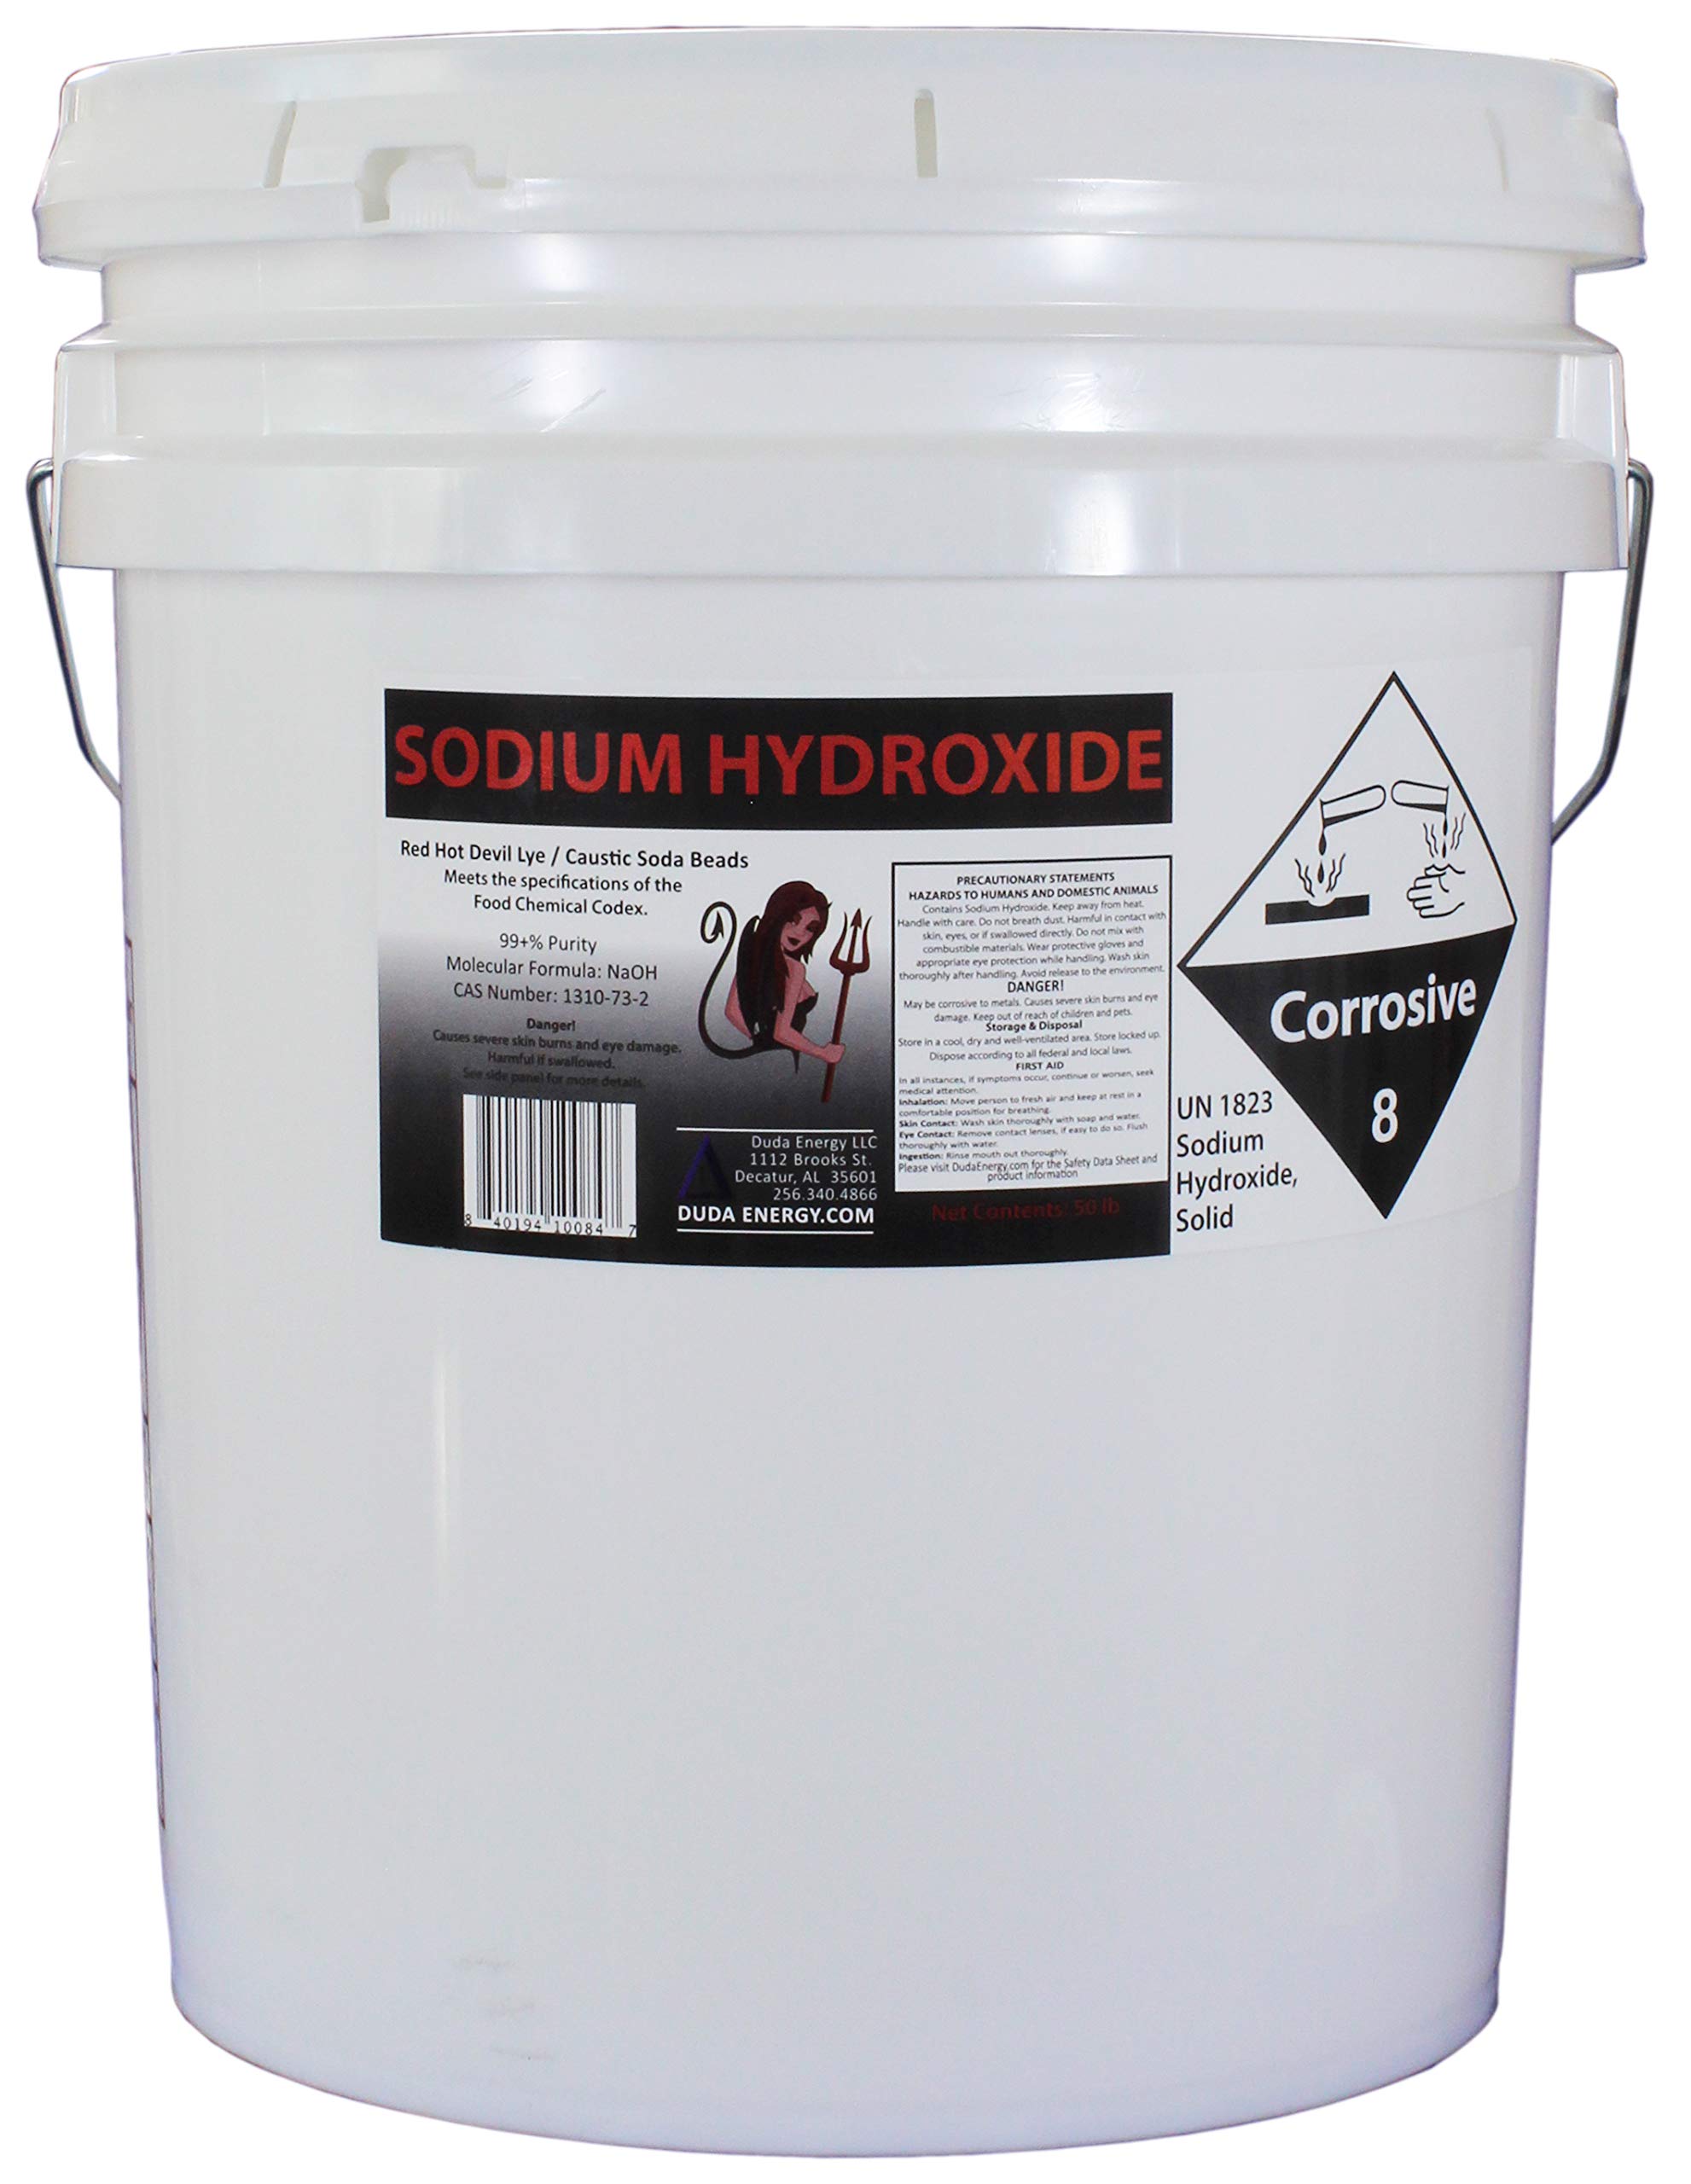 Duda Energy 50 lb Red Hot Devil Lye Sodium Hydroxide, Import Material, High Grade Caustic Soda Beads